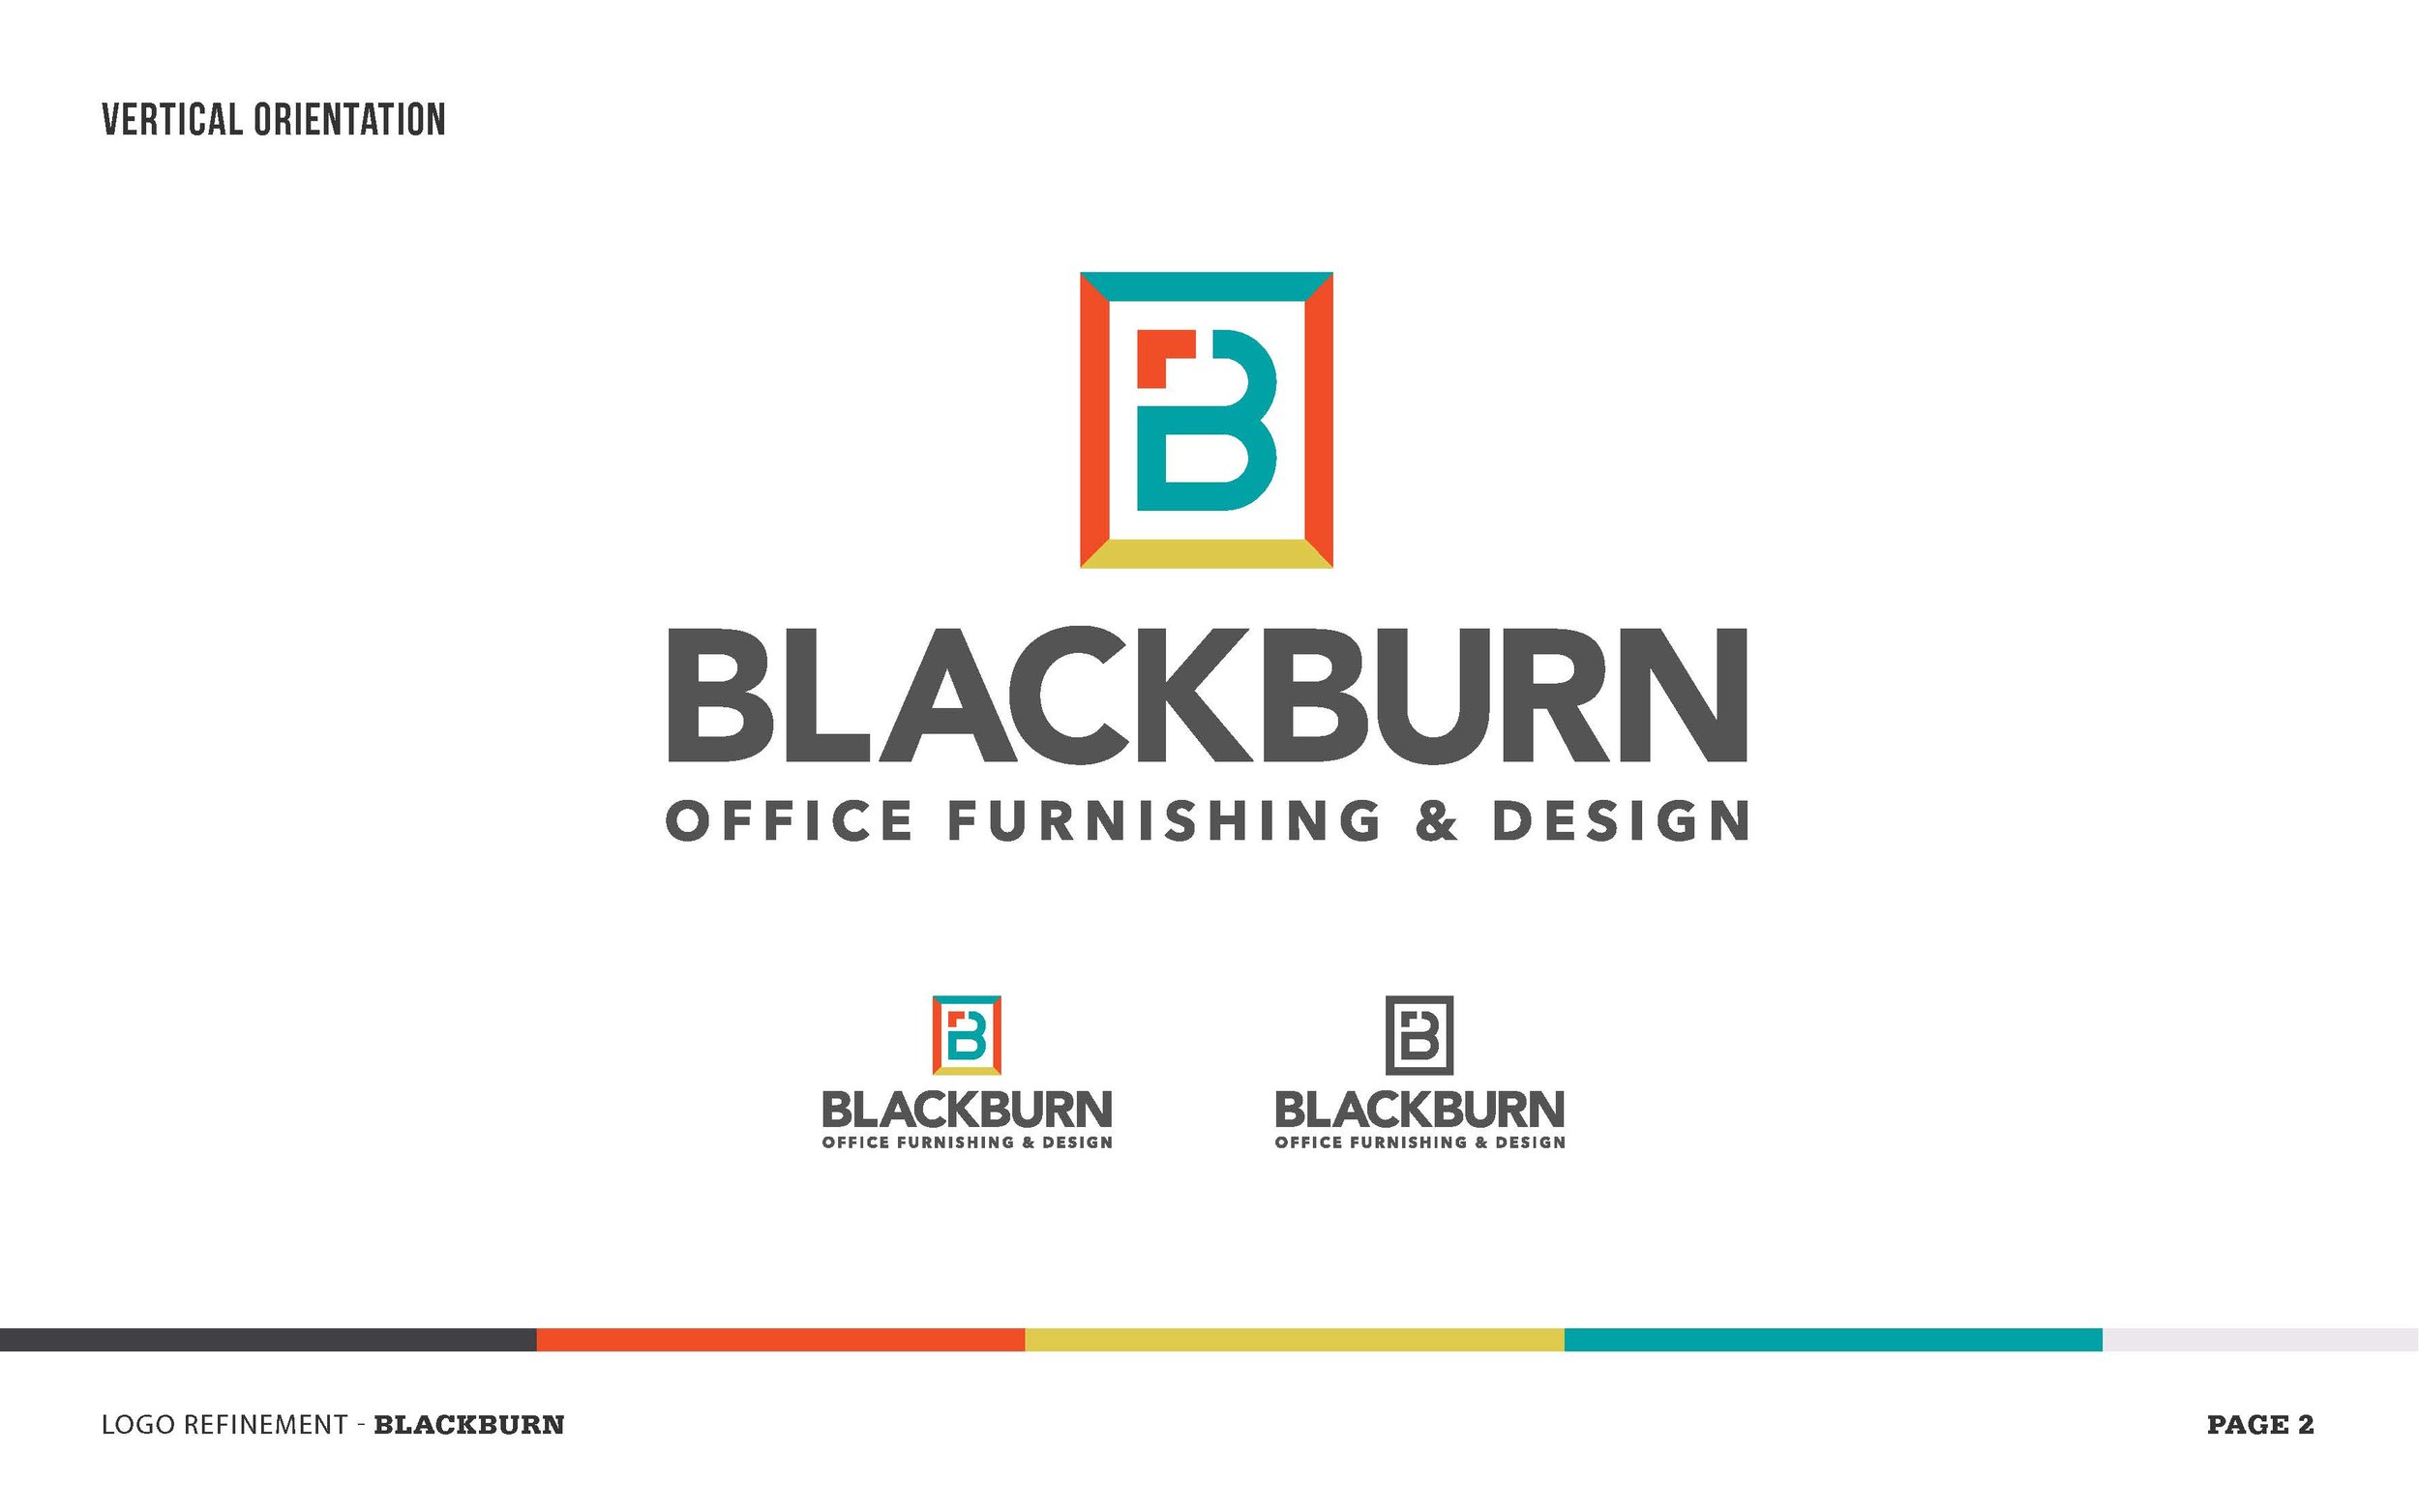 blkbrn-logo-refinement-presentation-V1_Page_2.jpg